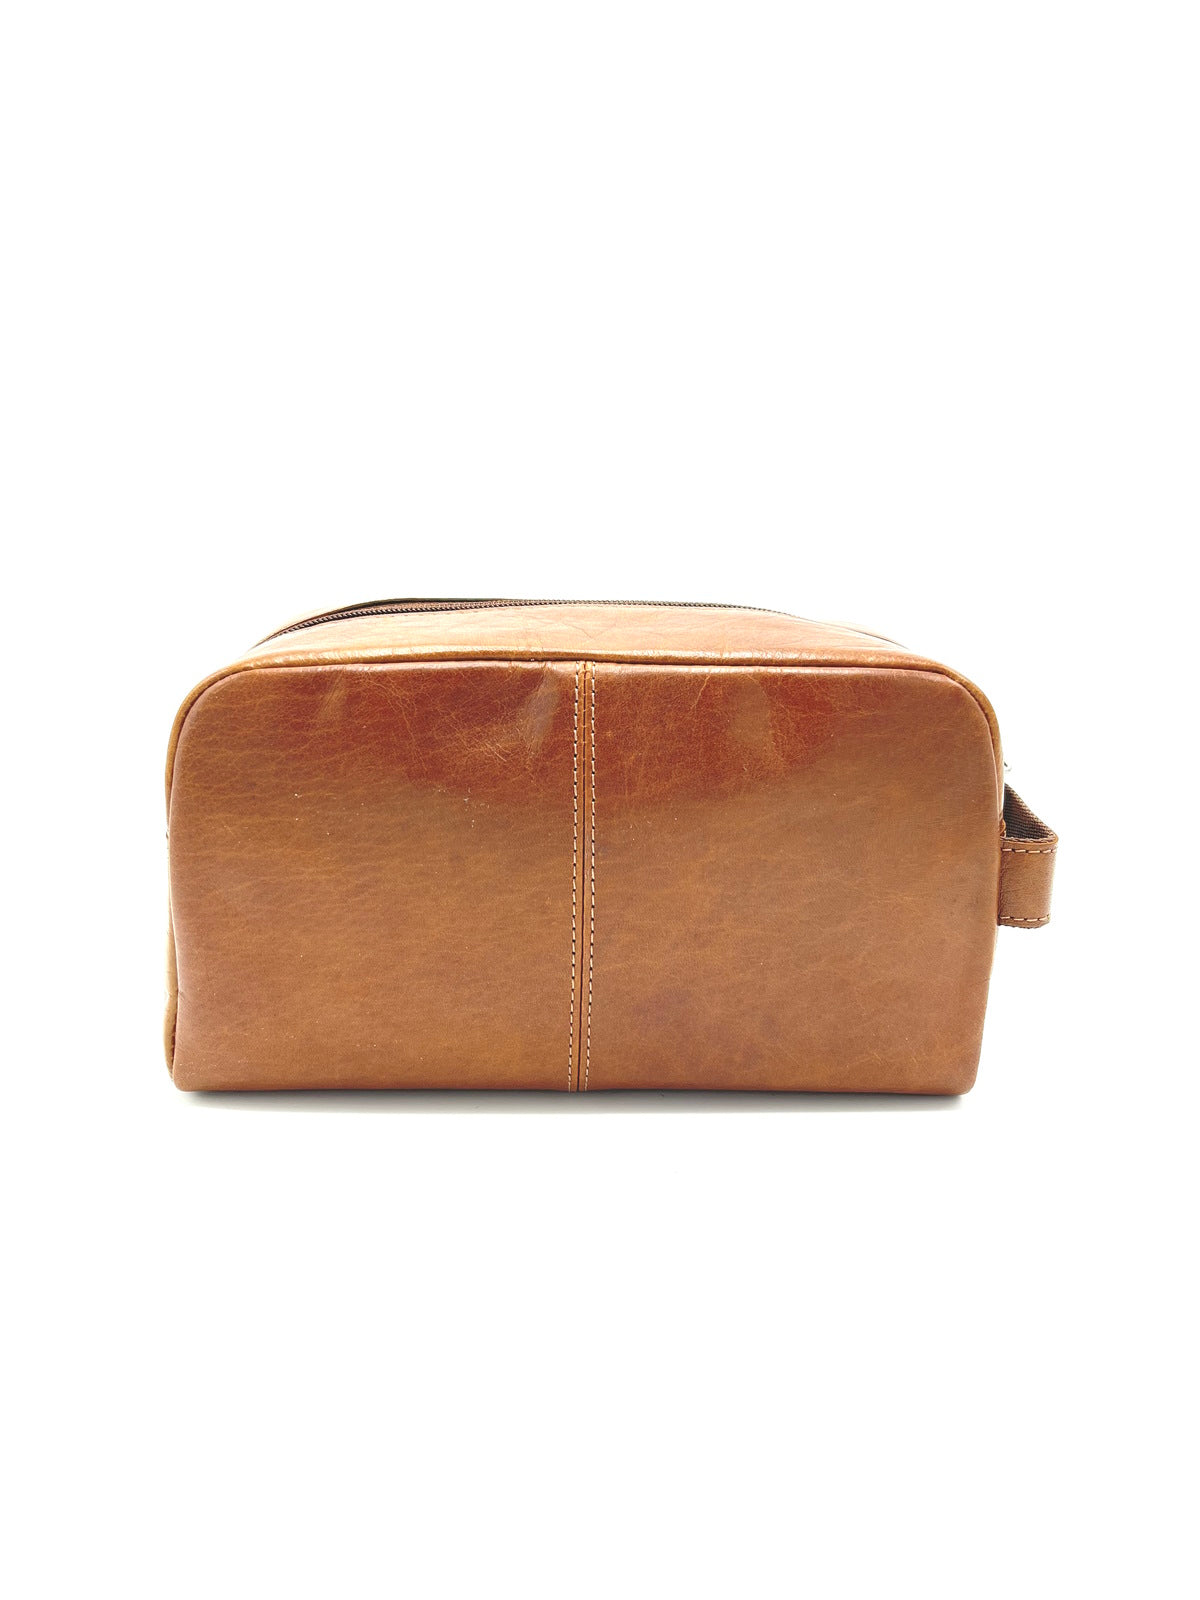 Brand Basile, Genuine Leather Beauty Case, art. BT490TI.392